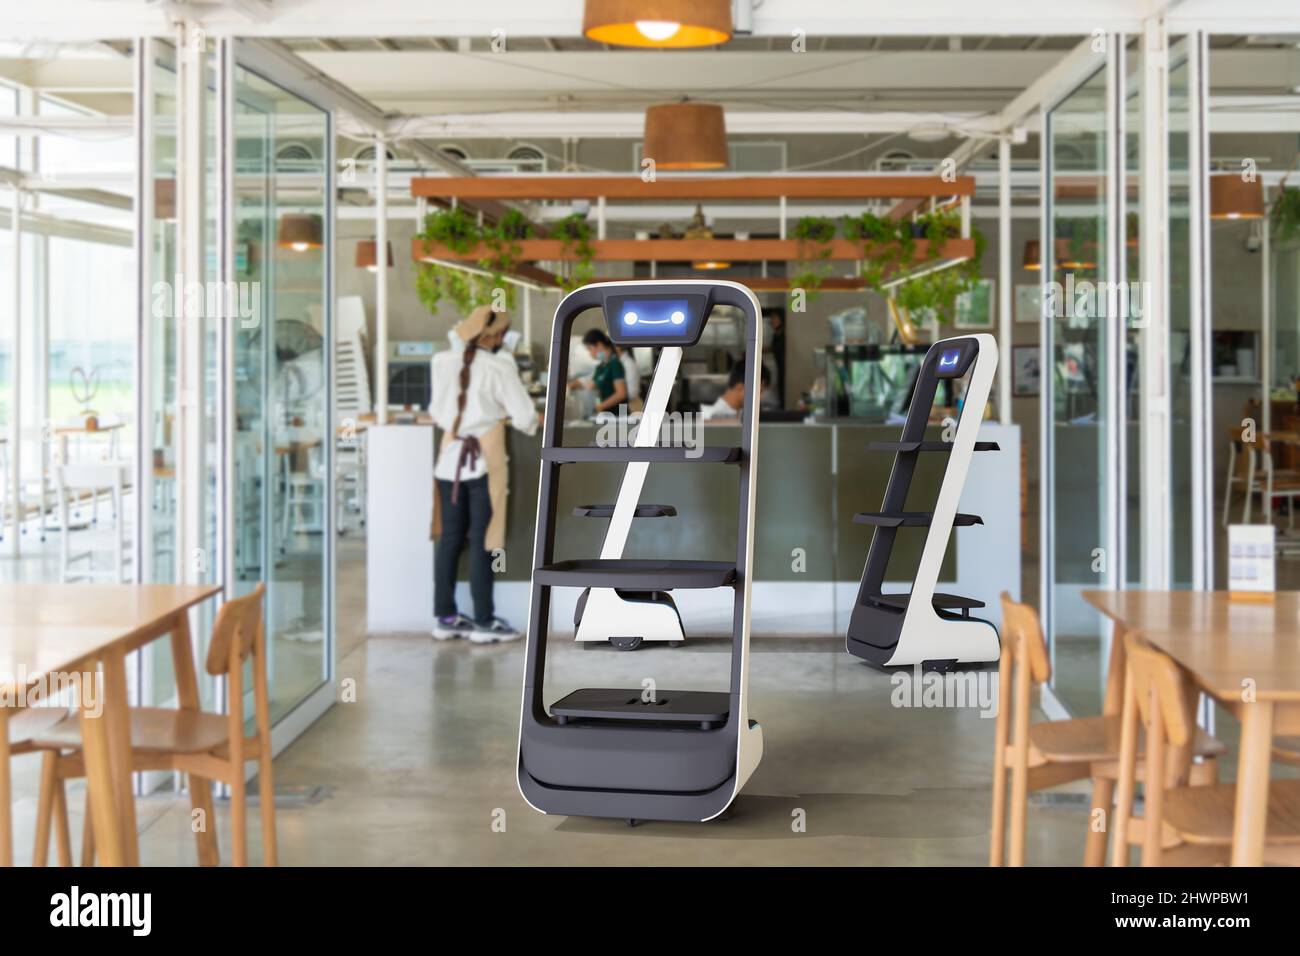 Autonomous waiter robot working in restaurant, Artificial intelligence 5G technology concept Stock Photo